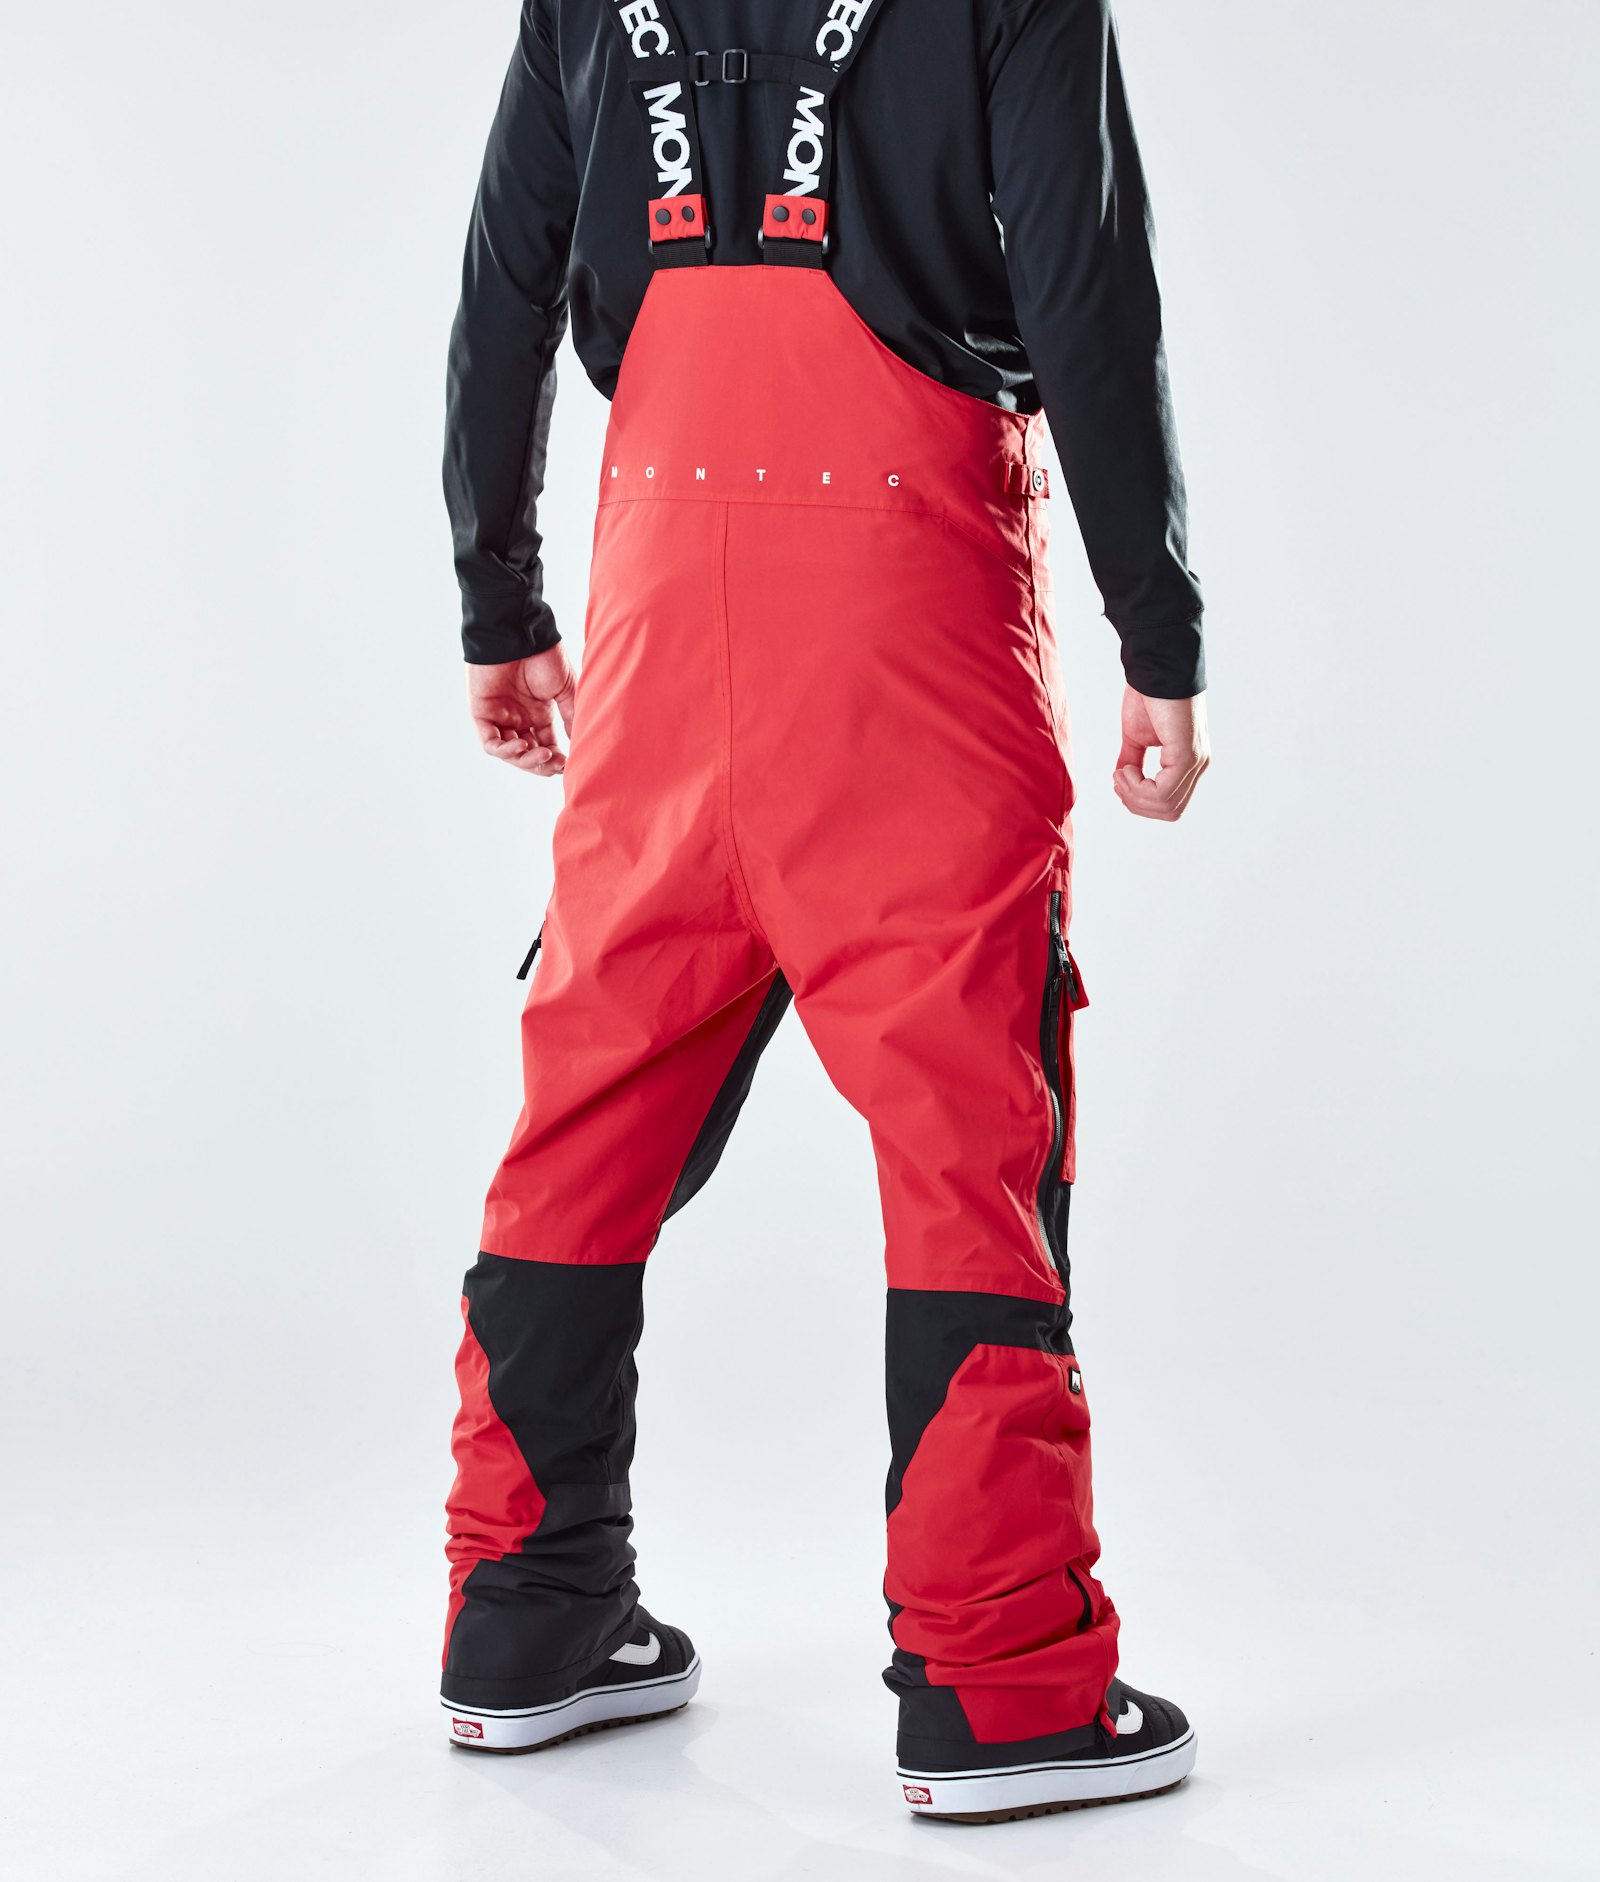 Fawk 2020 Pantaloni Snowboard Uomo Red/Black